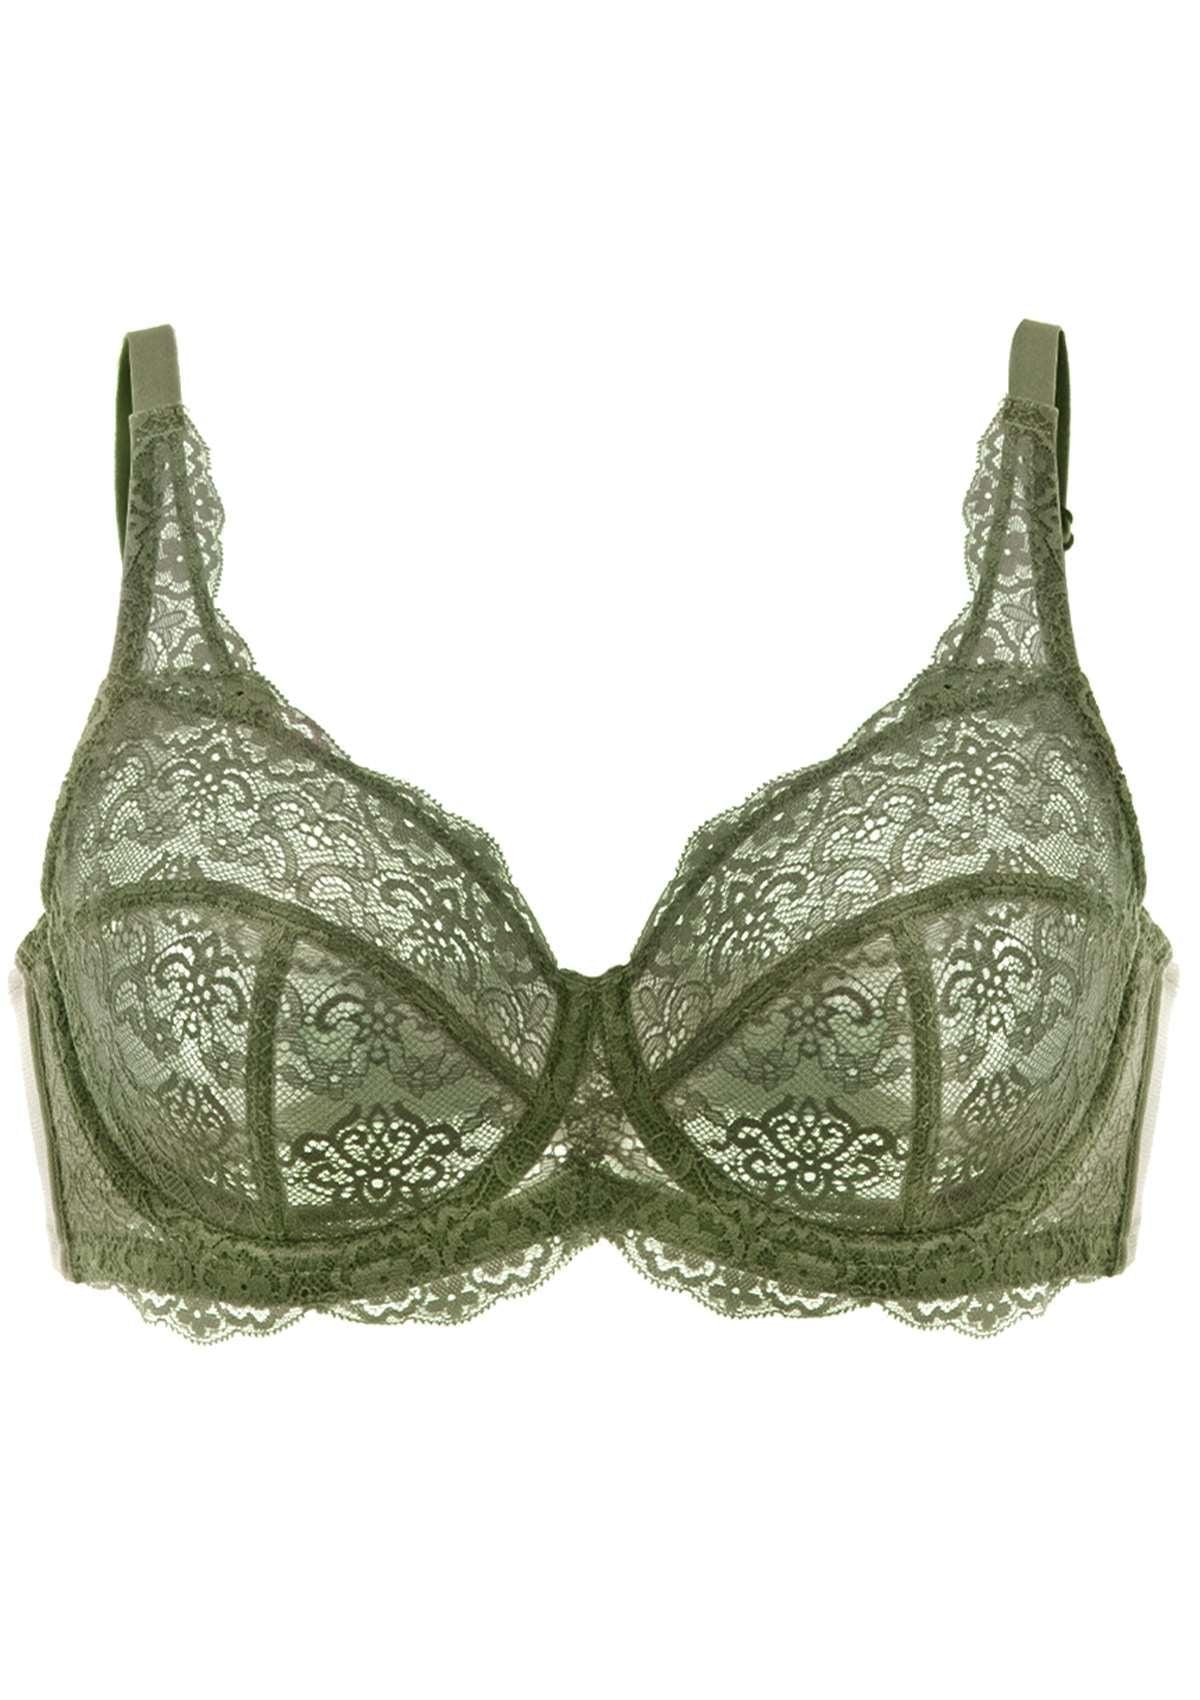 HSIA All-Over Floral Lace Unlined Bra: Minimizer Bra For Heavy Breasts - Dark Green / 42 / DD/E